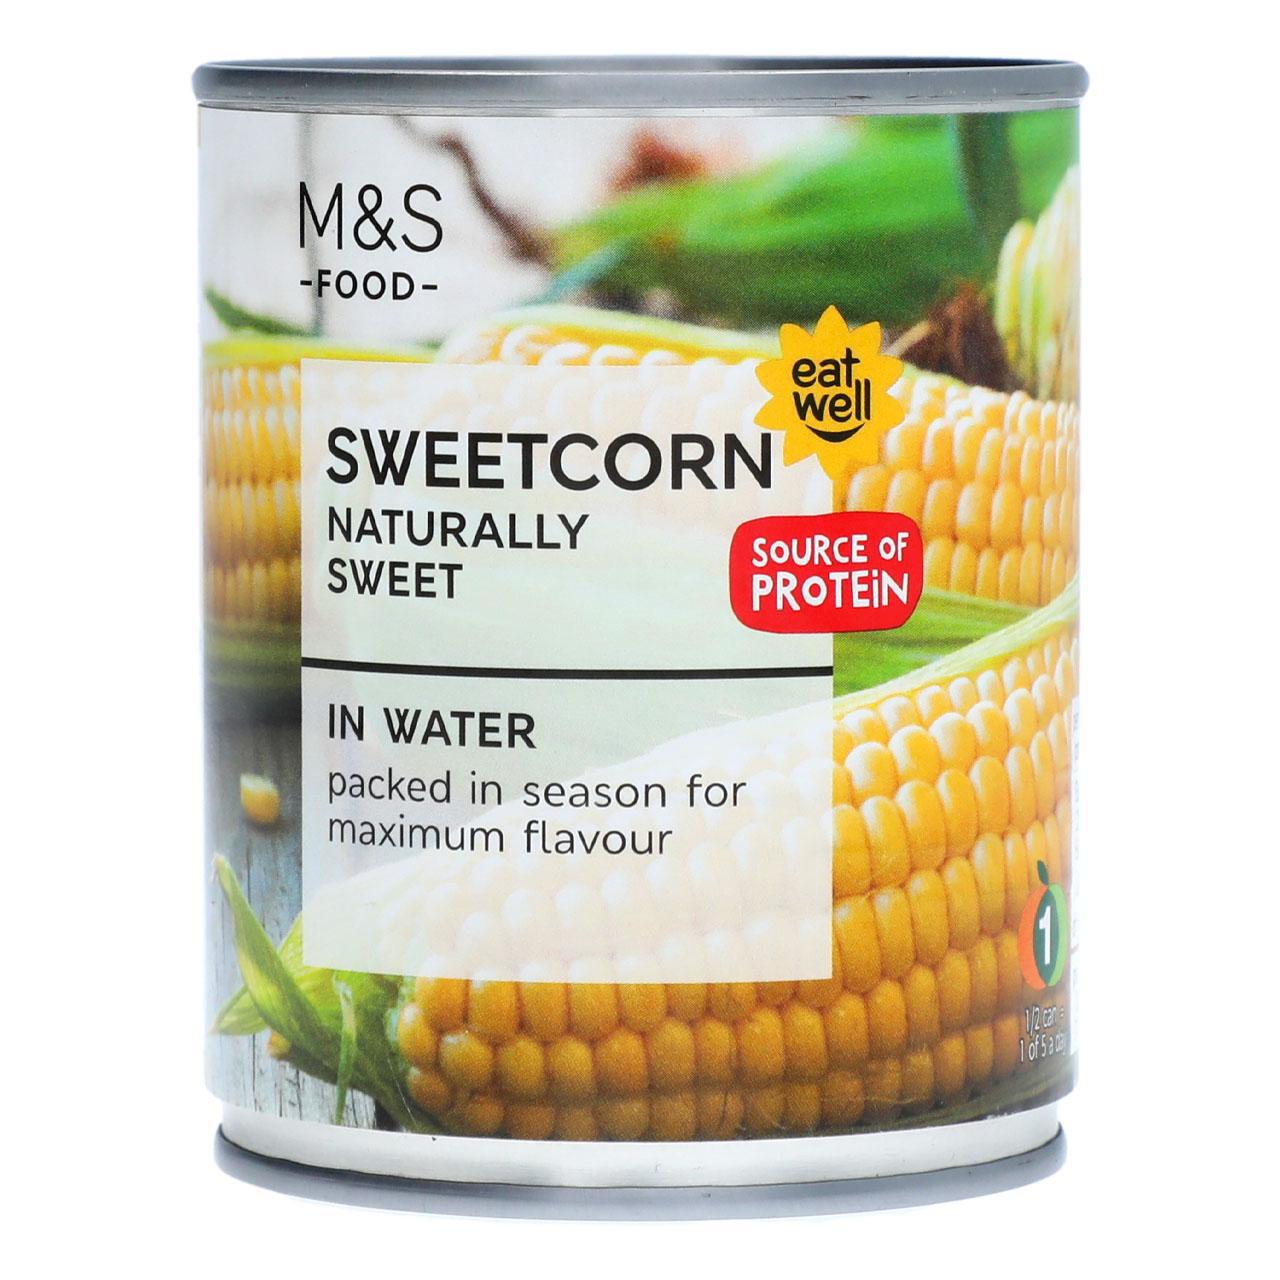 M&S Sweet Sweetcorn 195g